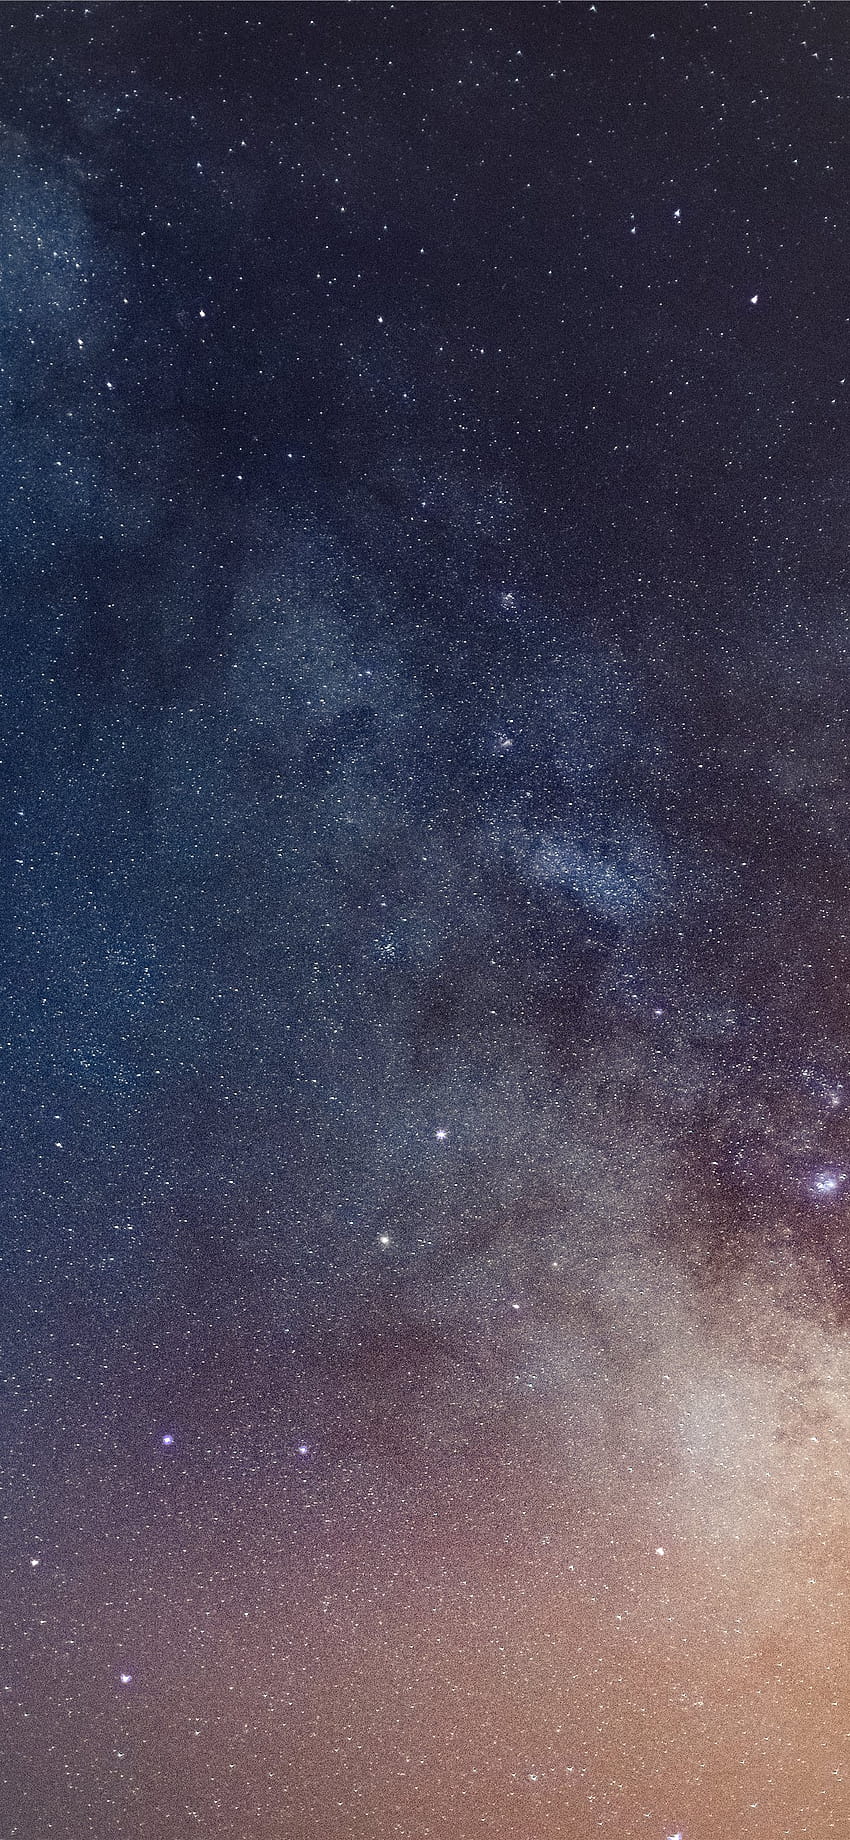 langit malam berbintang biru dan jingga iPhone X wallpaper ponsel HD